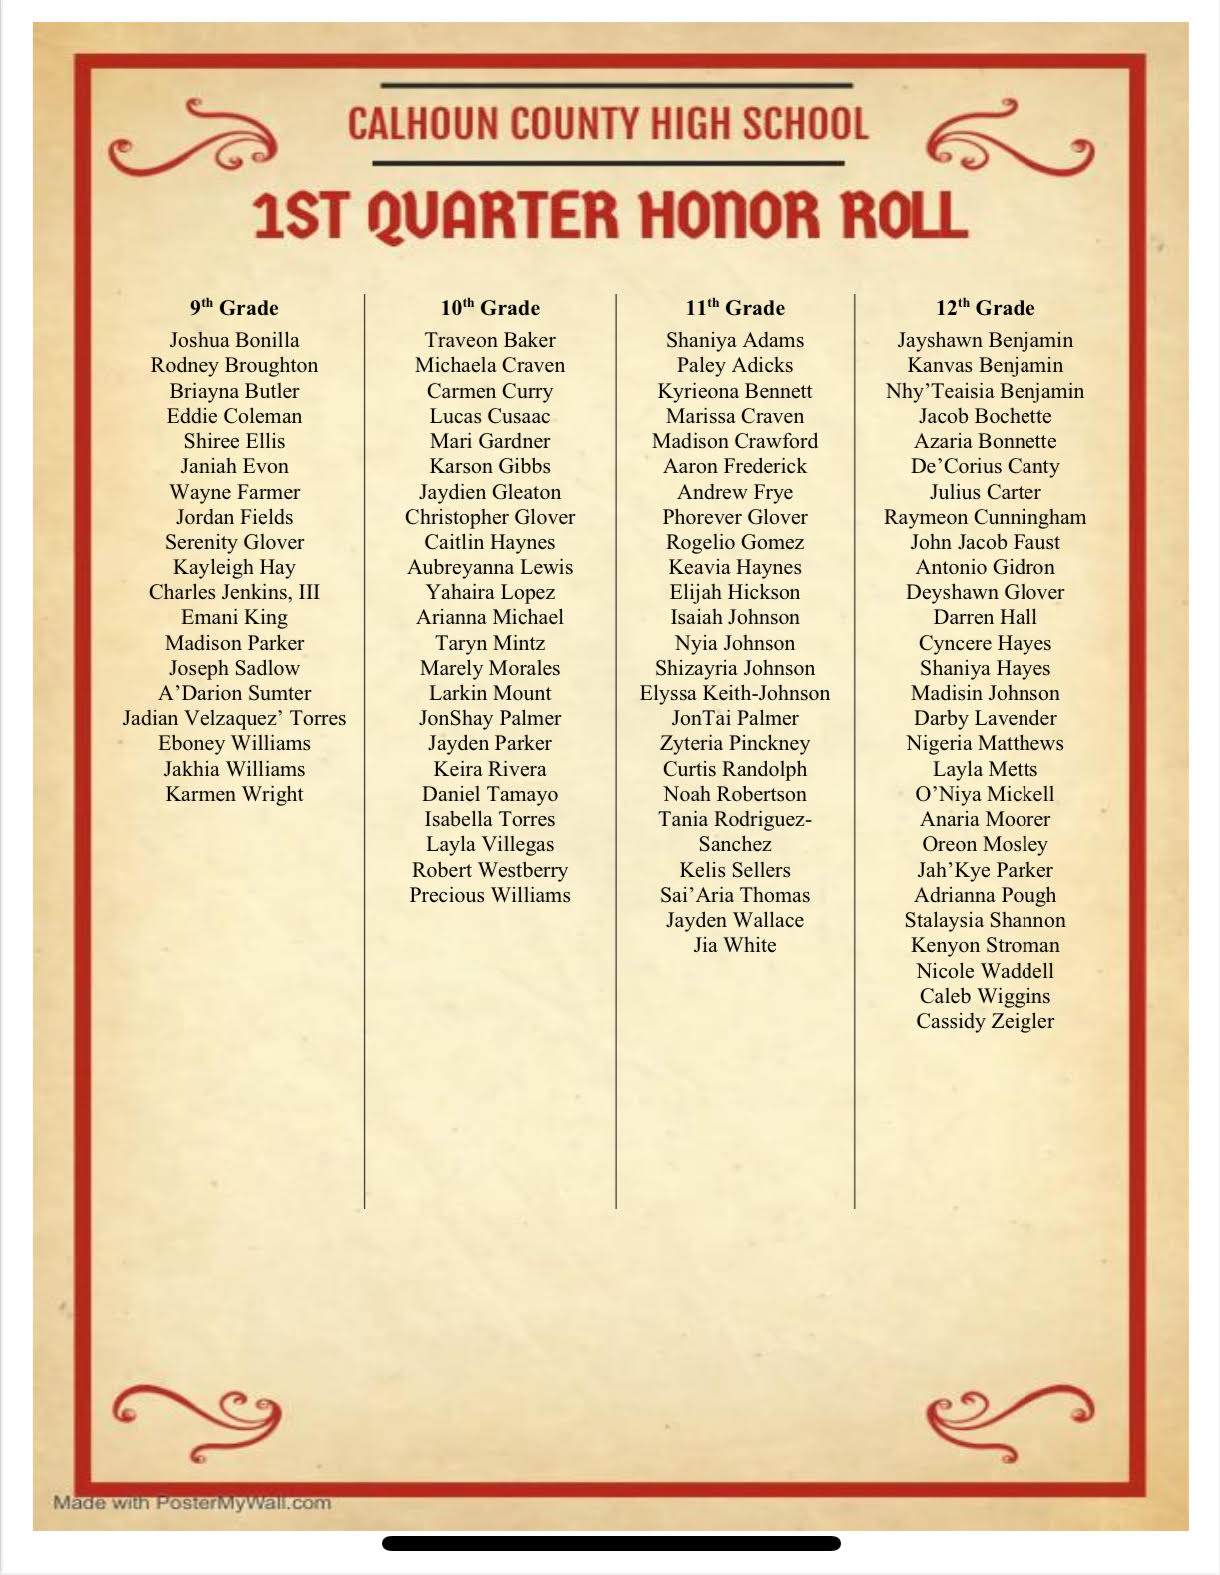 Quarter 1 Honor Roll